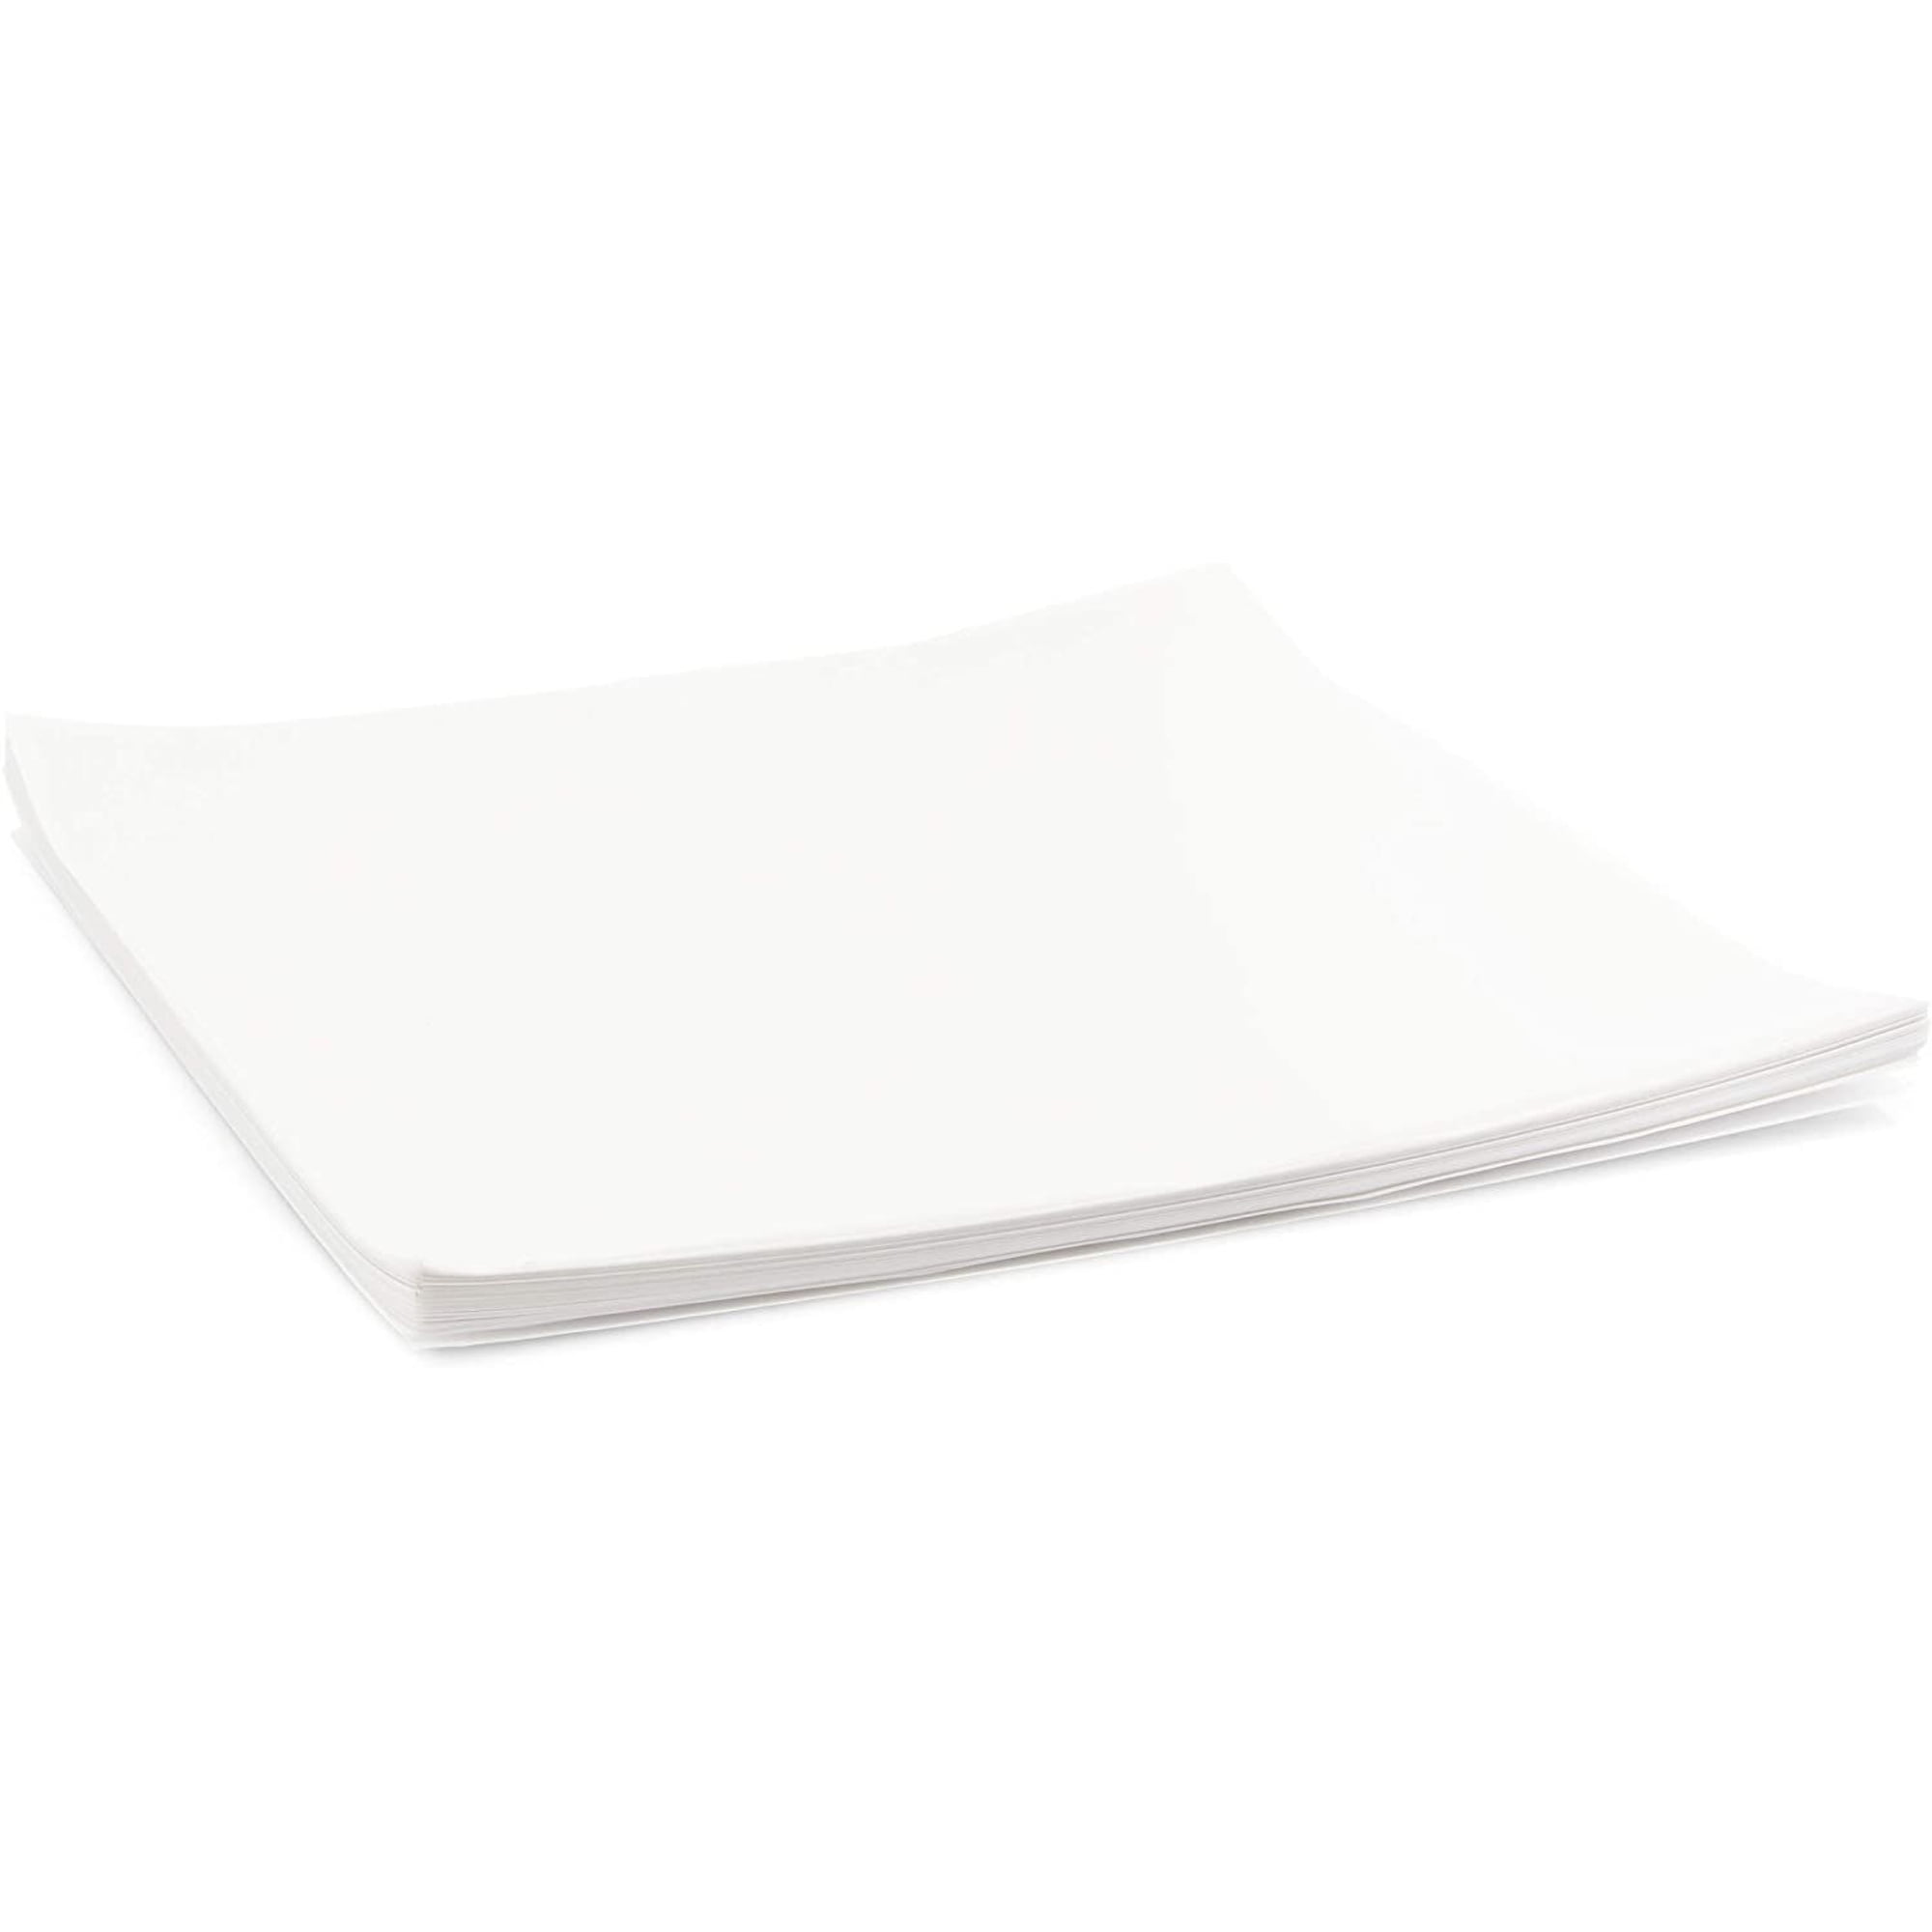 BOB's Vellum Paper Translucent Transfer Paper 100 Sheets/Pack - Performance  Screen Supply